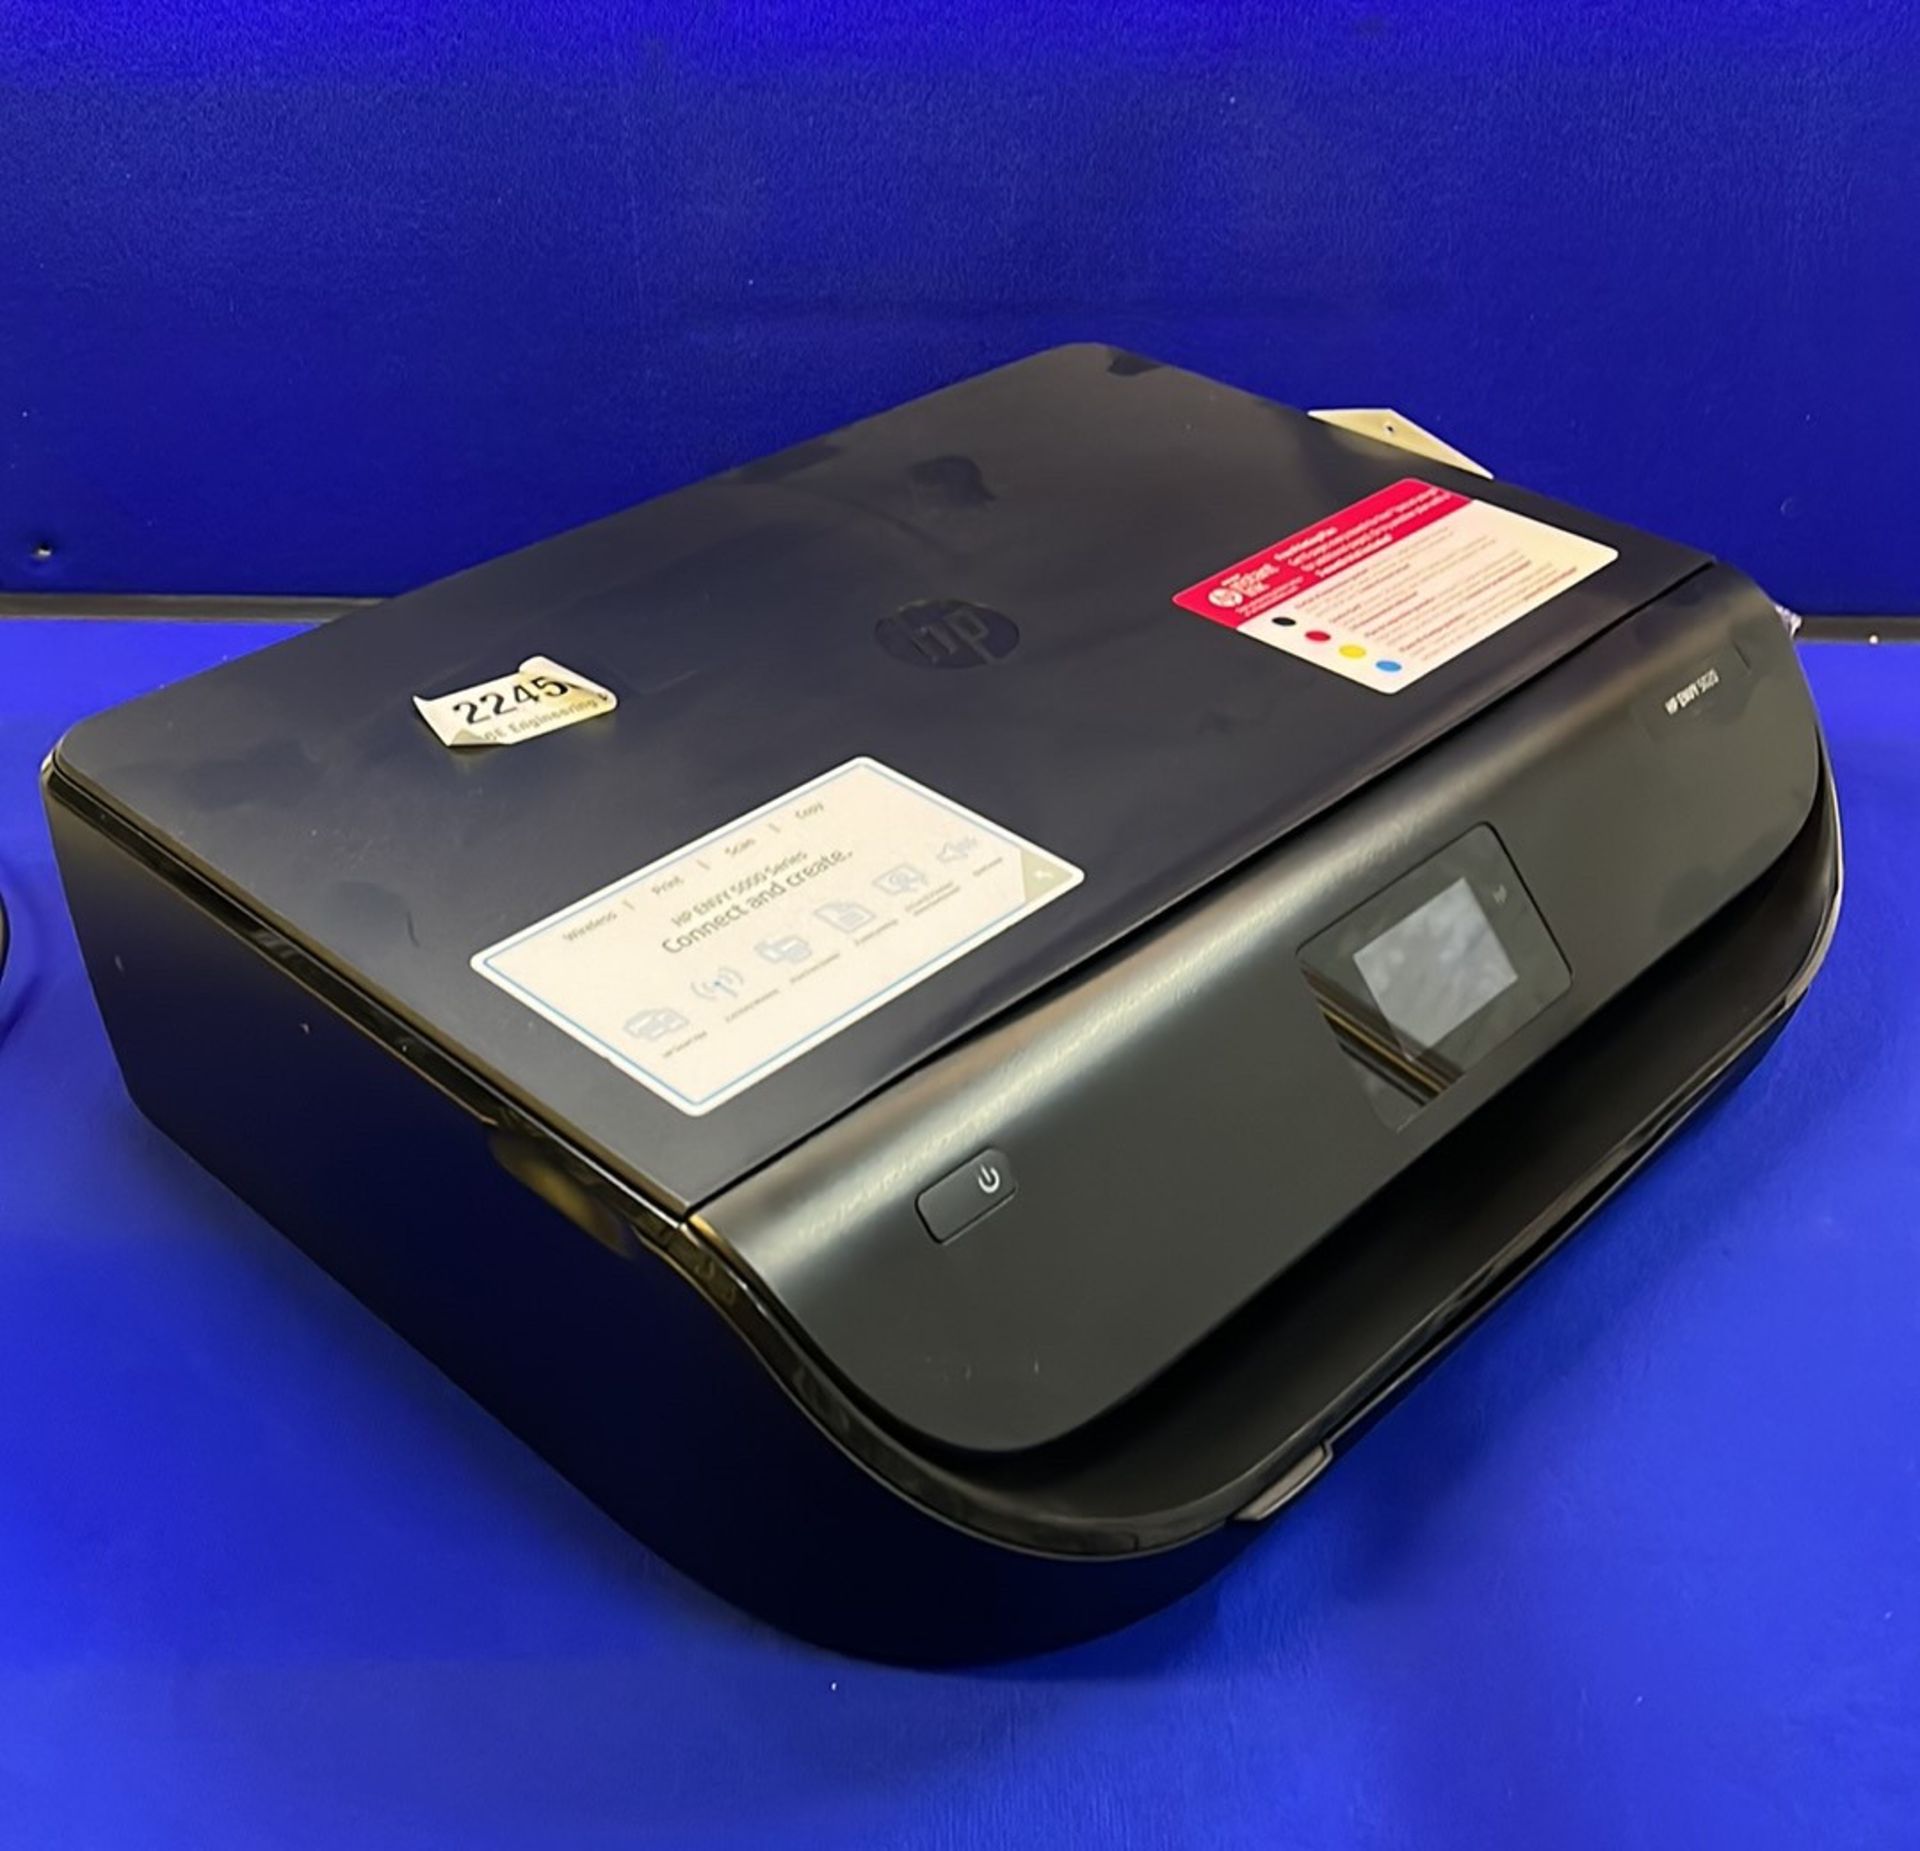 HP Envy 5020 All In One Laserjet Printer - Image 2 of 4